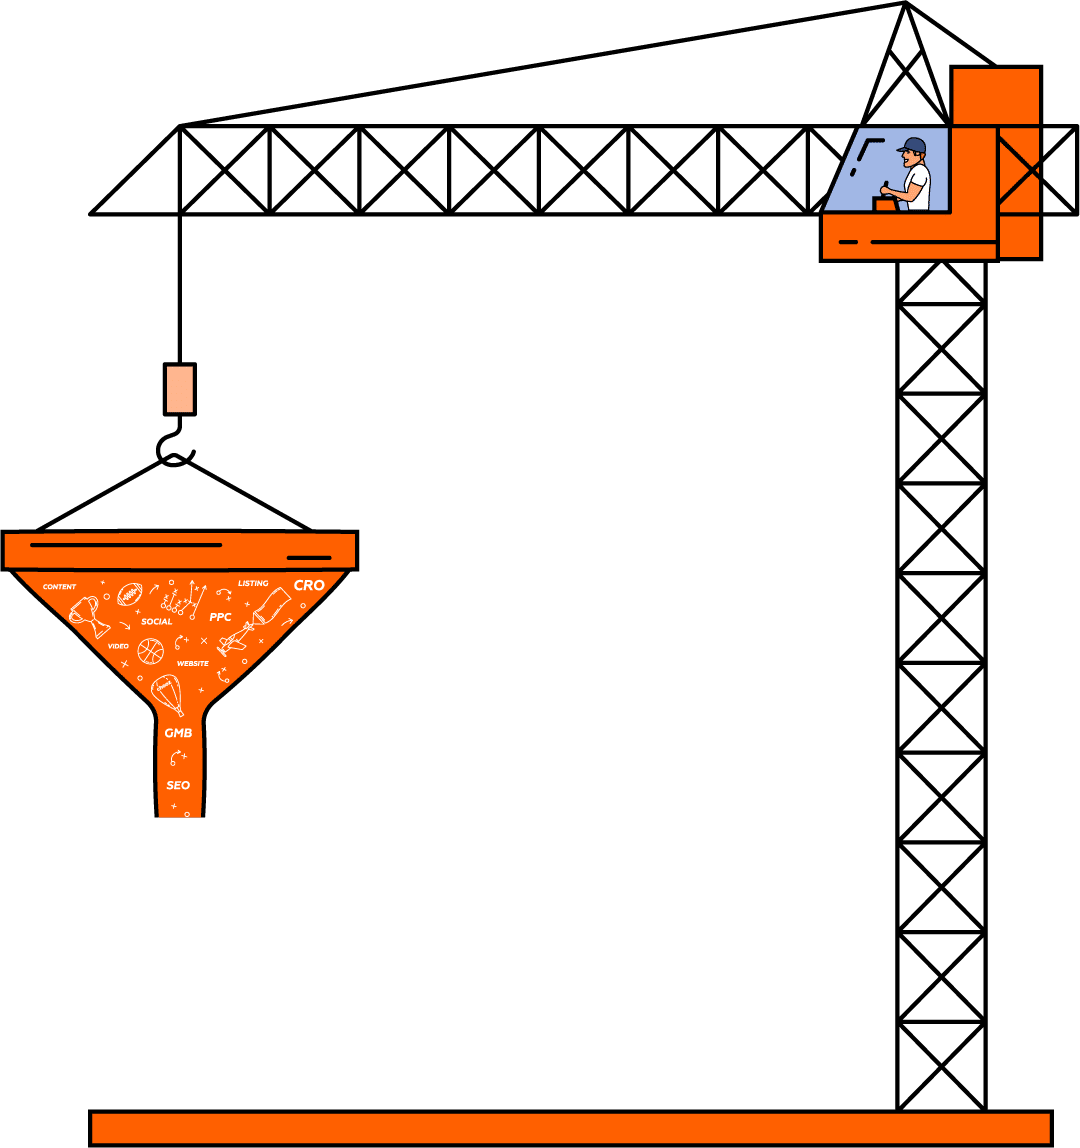 Chooz Marketing construction crane with digital marketing funnel illustration for lawyers